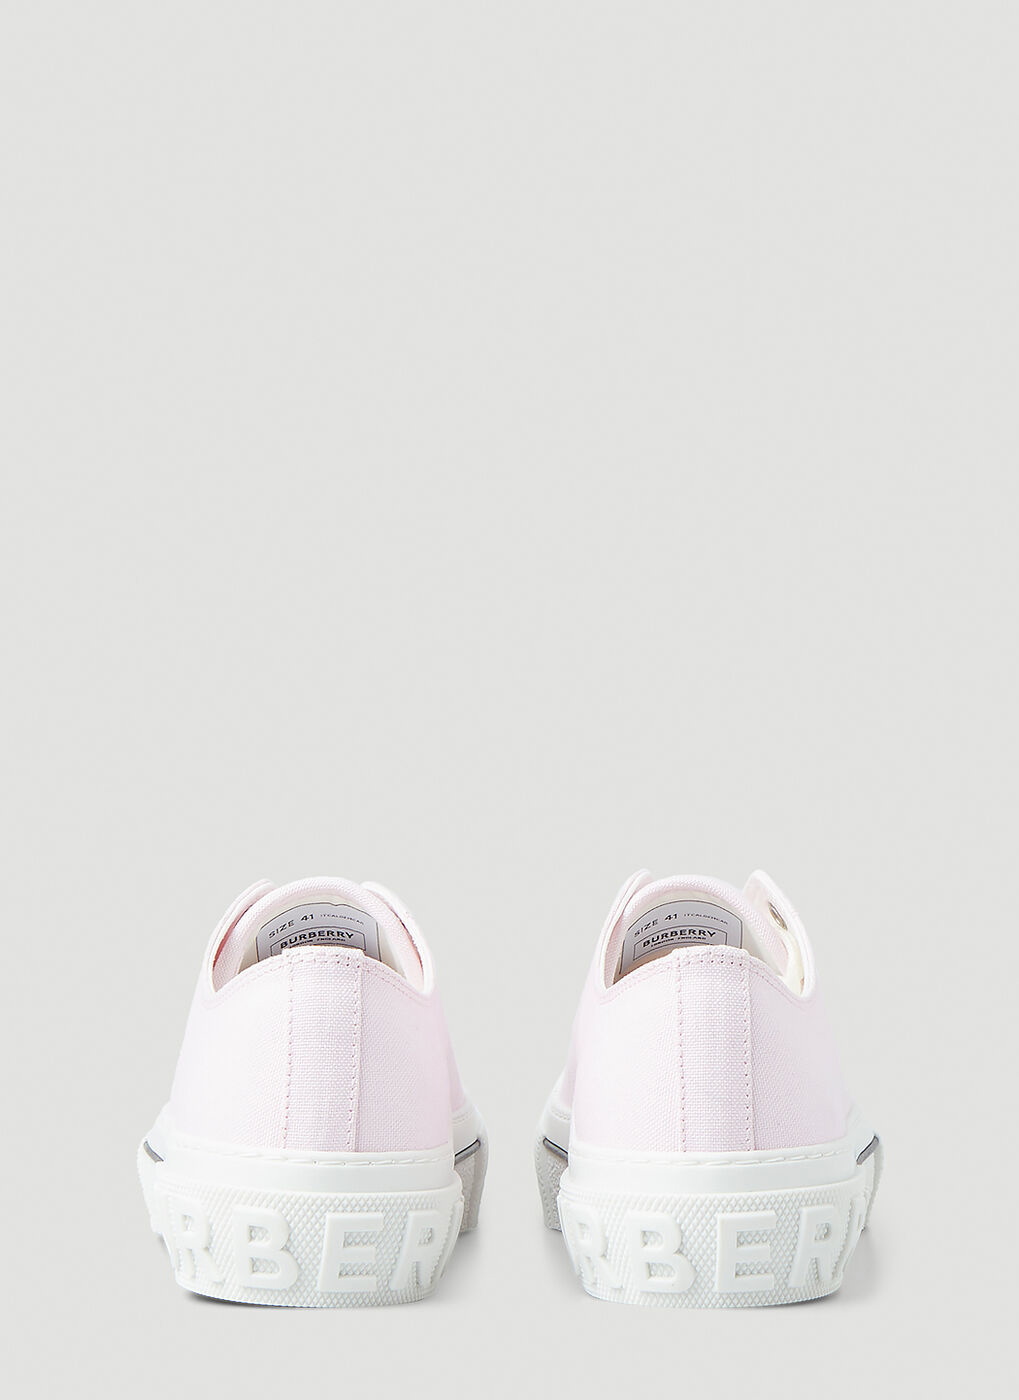 Jack Sneakers in Pink Burberry